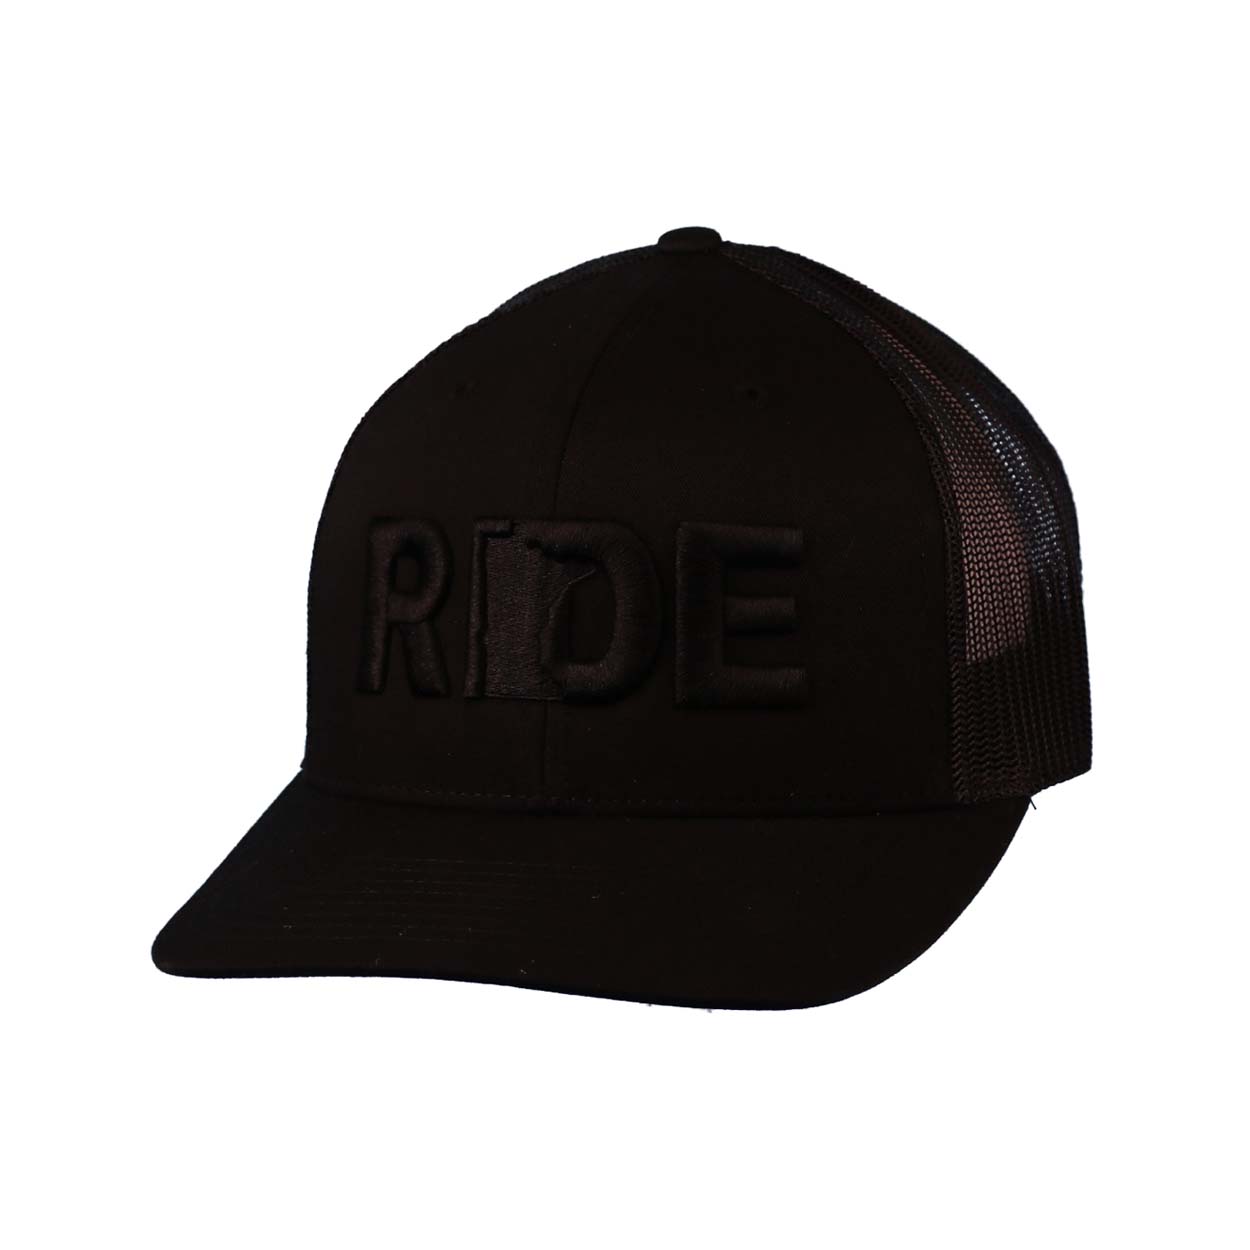 Ride Minnesota Classic Embroidered Snapback Trucker Hat Black/Black